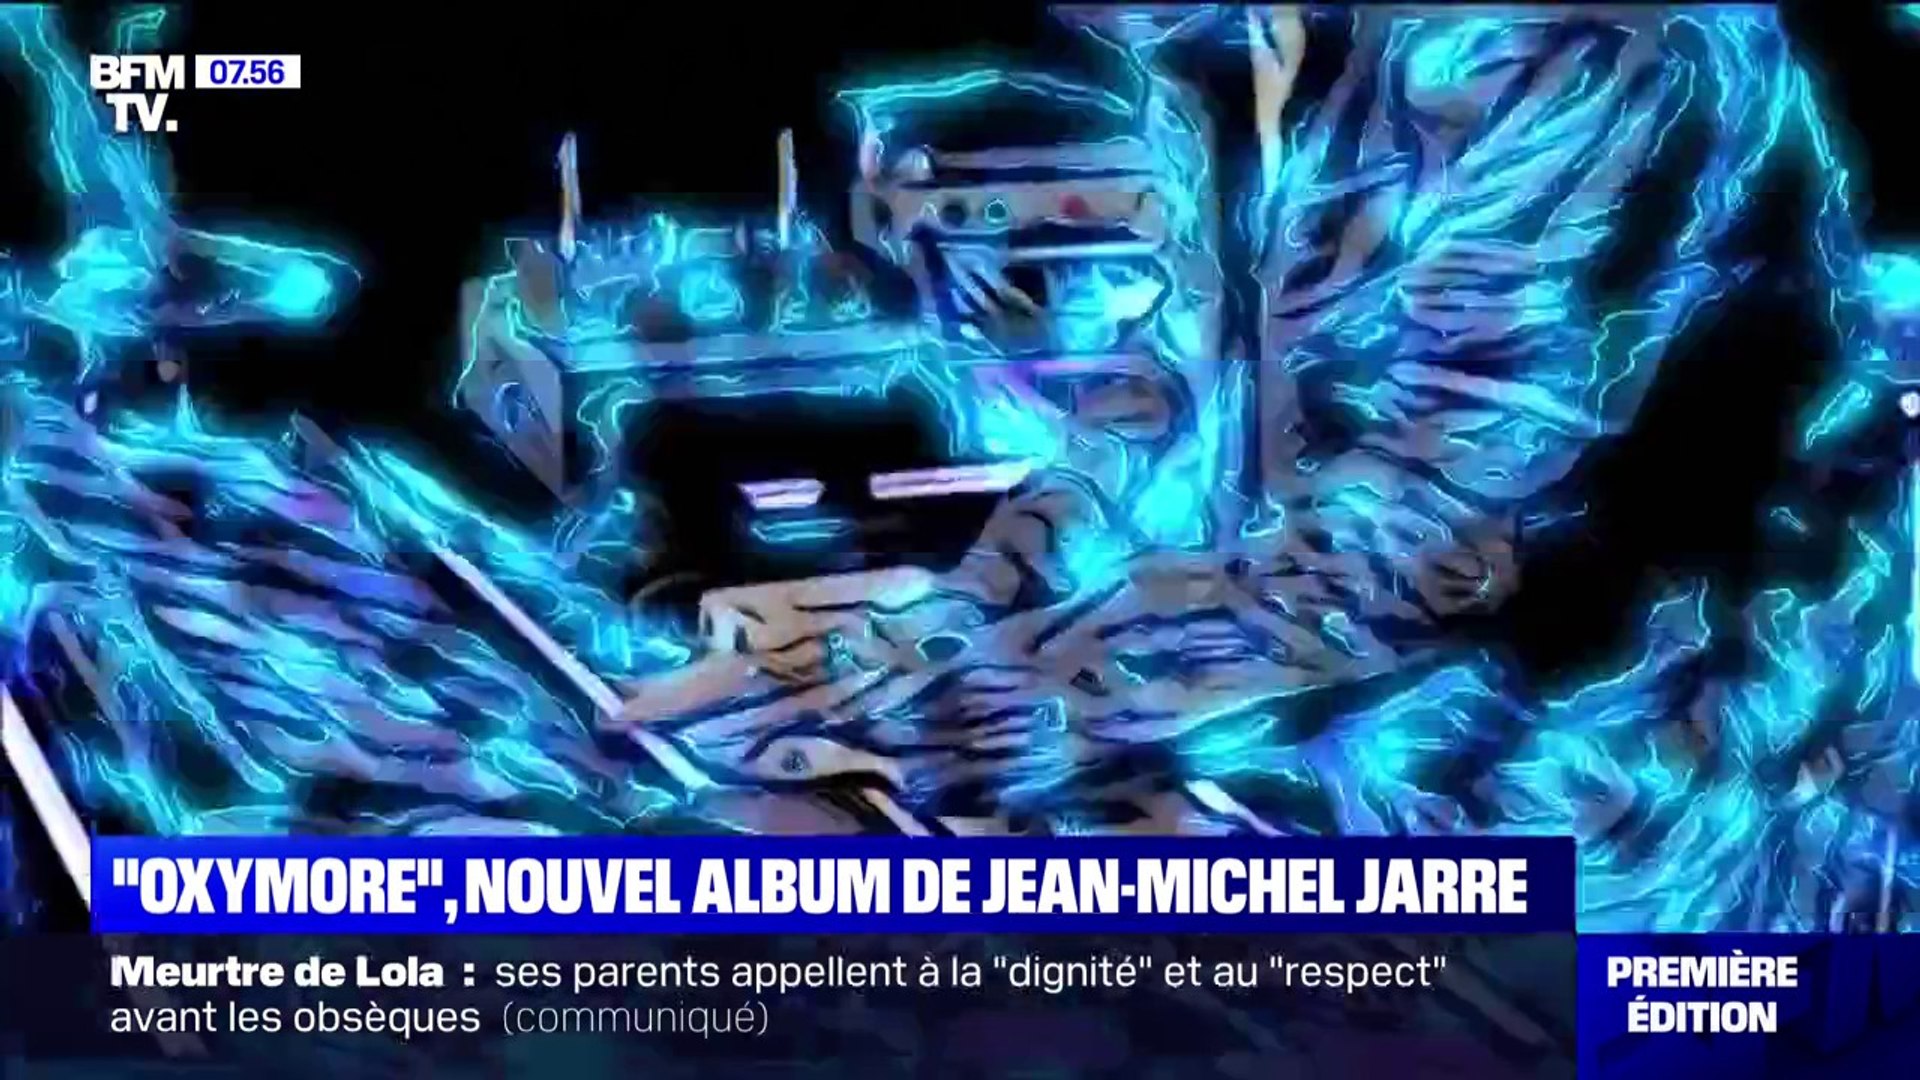 Oxymore", le 22ème album de Jean-Michel Jarre, conçu en binaural, sort ce  vendredi - Vidéo Dailymotion